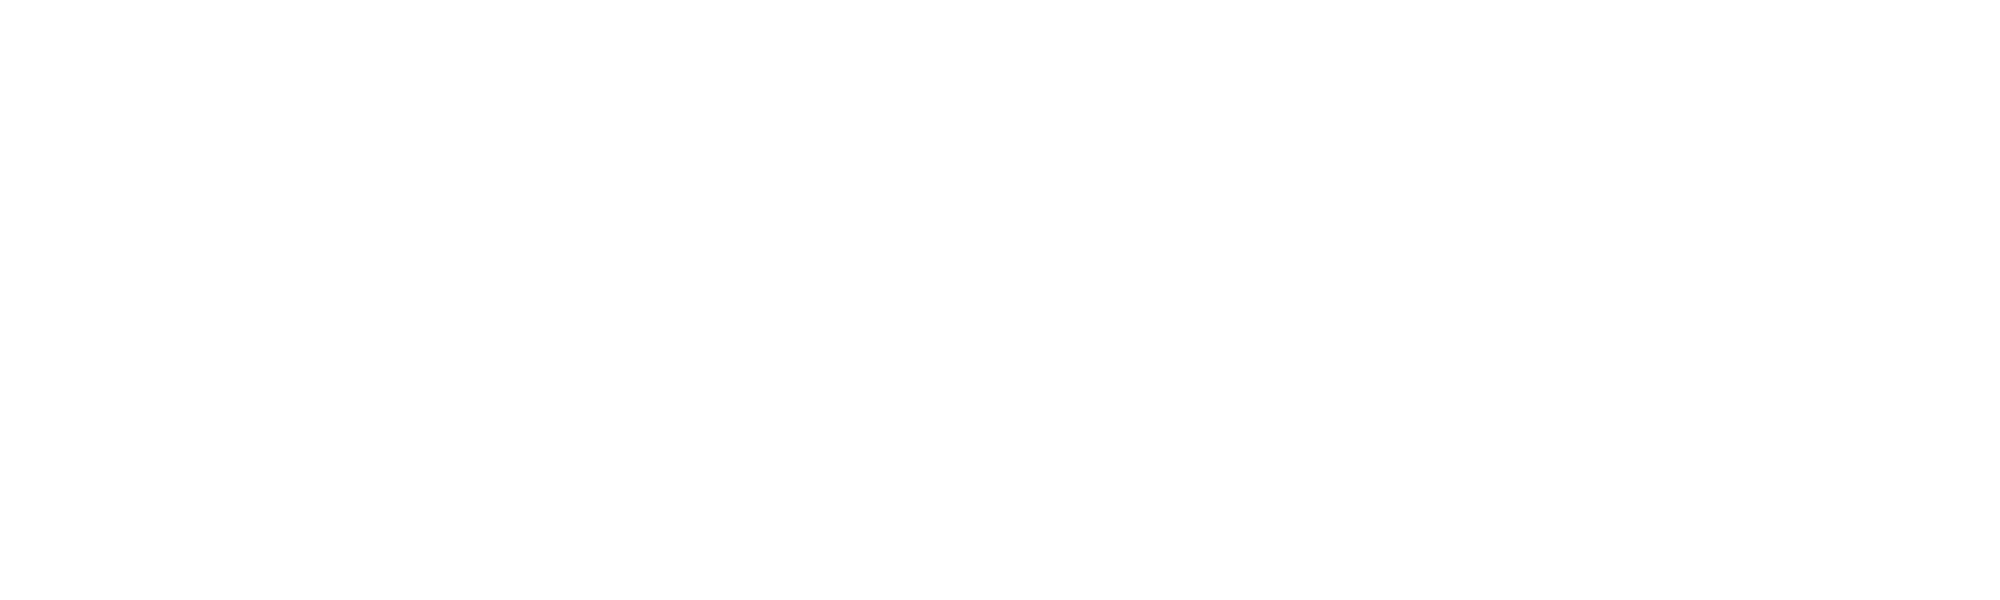 Placid Logo - SYFY Full Episodes. Lake Placid vs. Anaconda